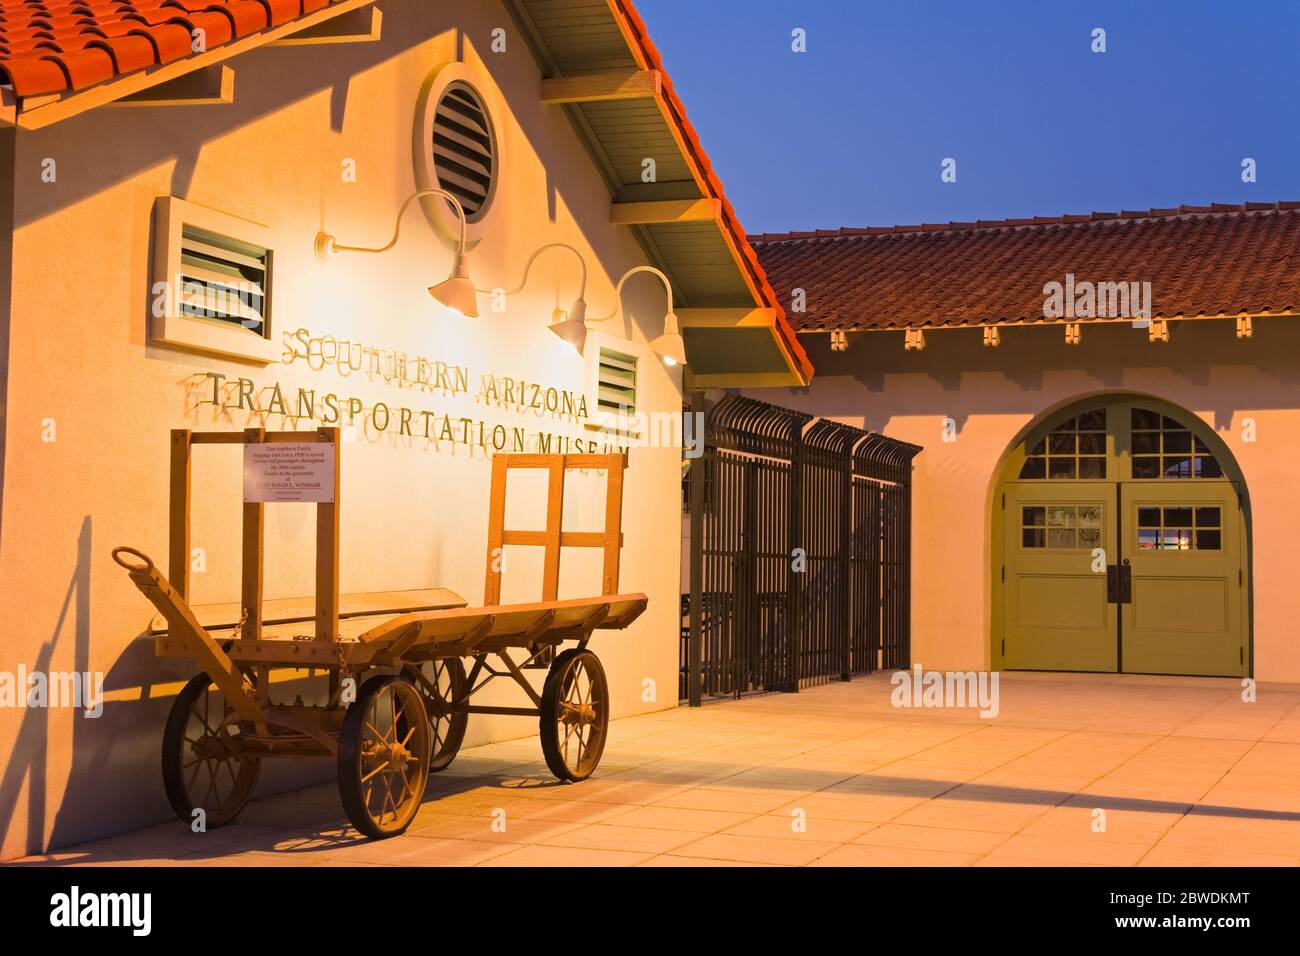 Southern Arizona Transportation Museum, Historic Railway Depot, Tucson, Pima County, Arizona, USA Stock Photo